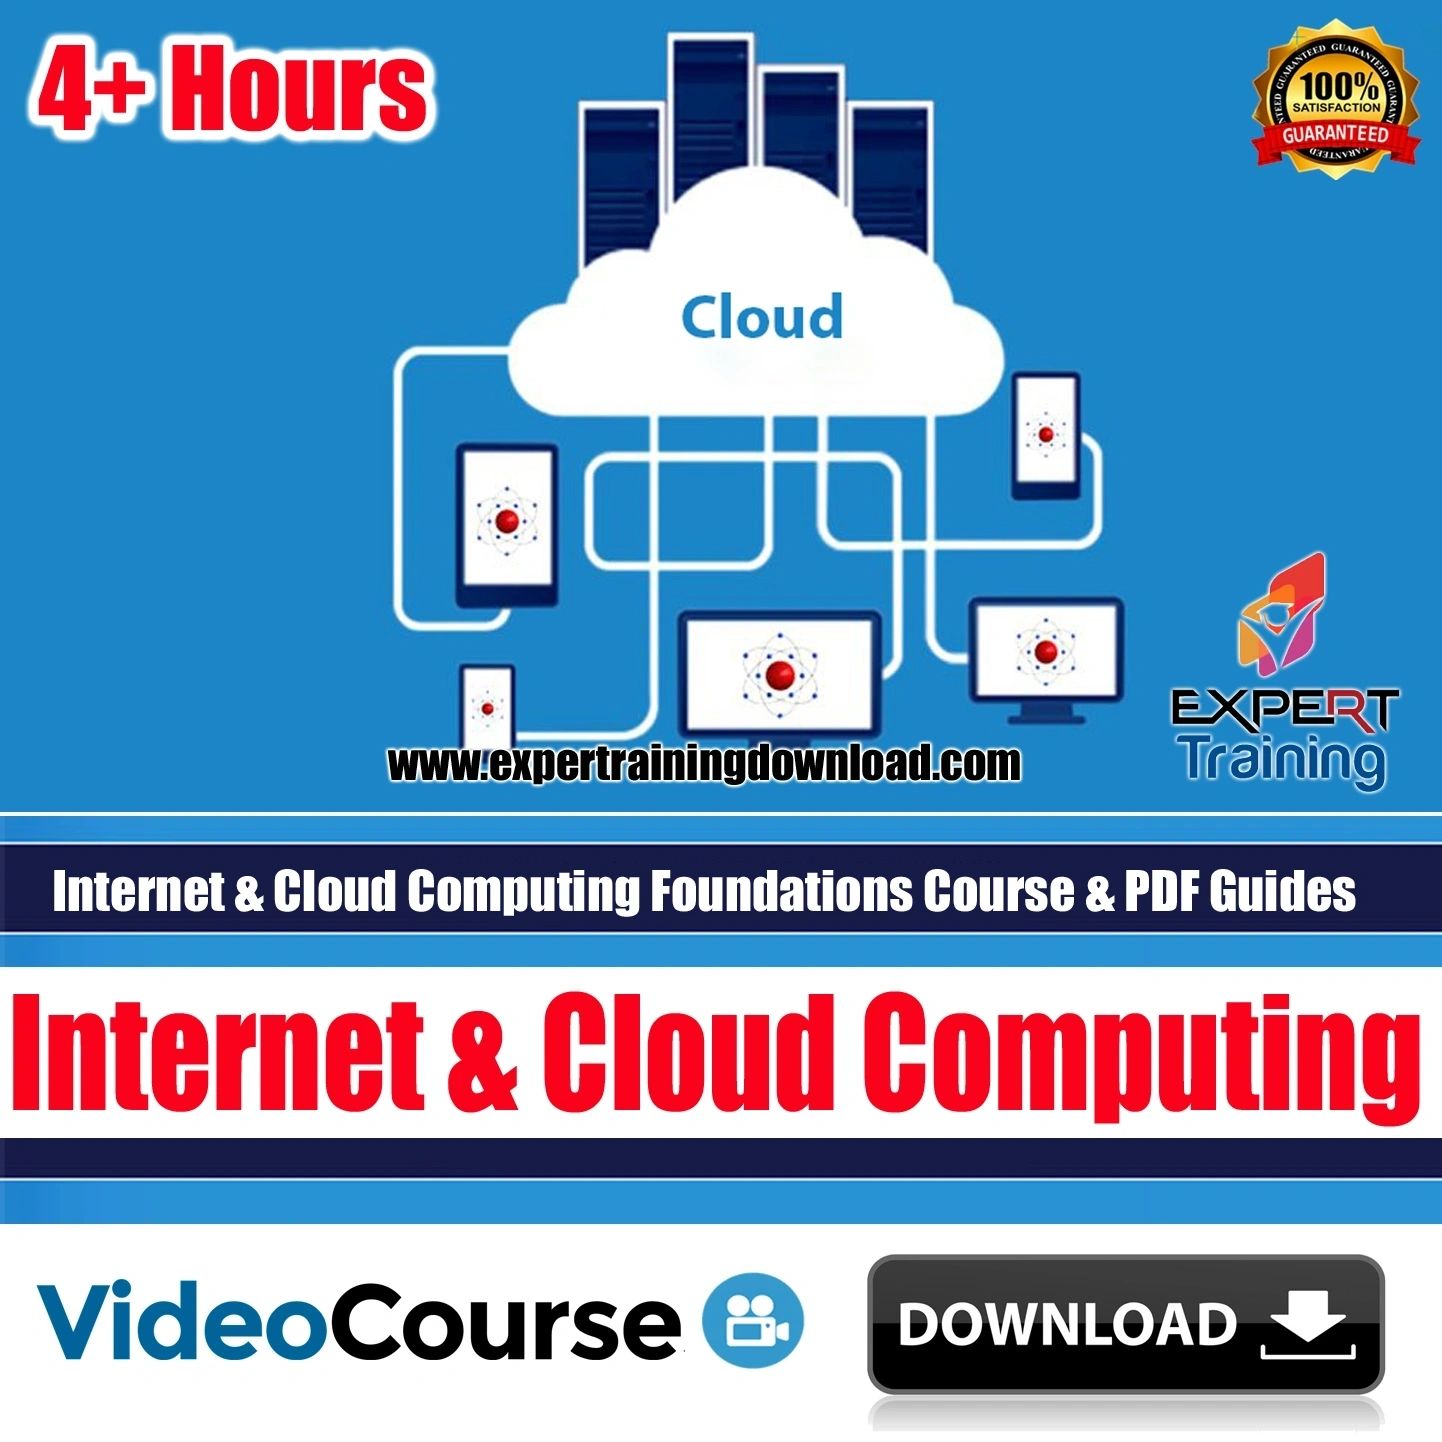 Internet & Cloud Computing Foundations Course & PDF Guides